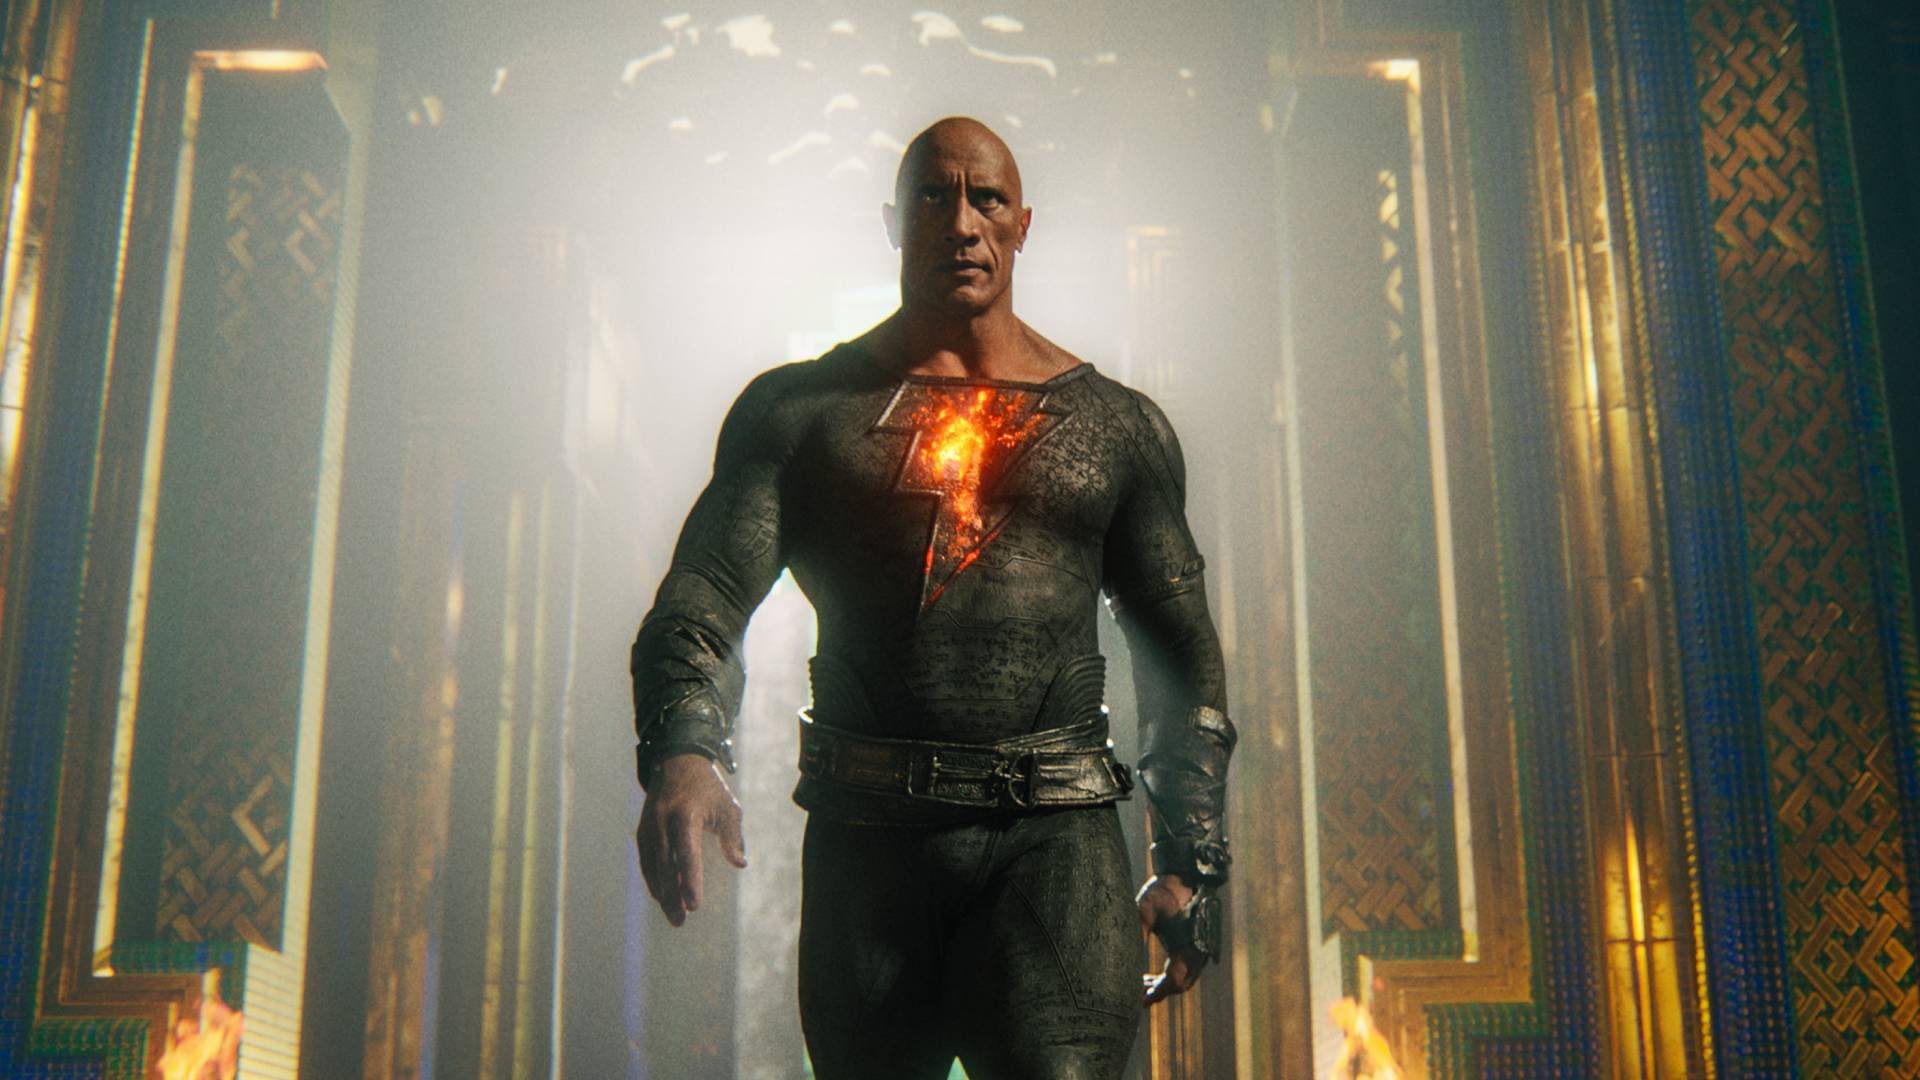 Superman star Henry Cavill 'confirmed for Man of Steel 2' after Black Adam  'demands', Films, Entertainment